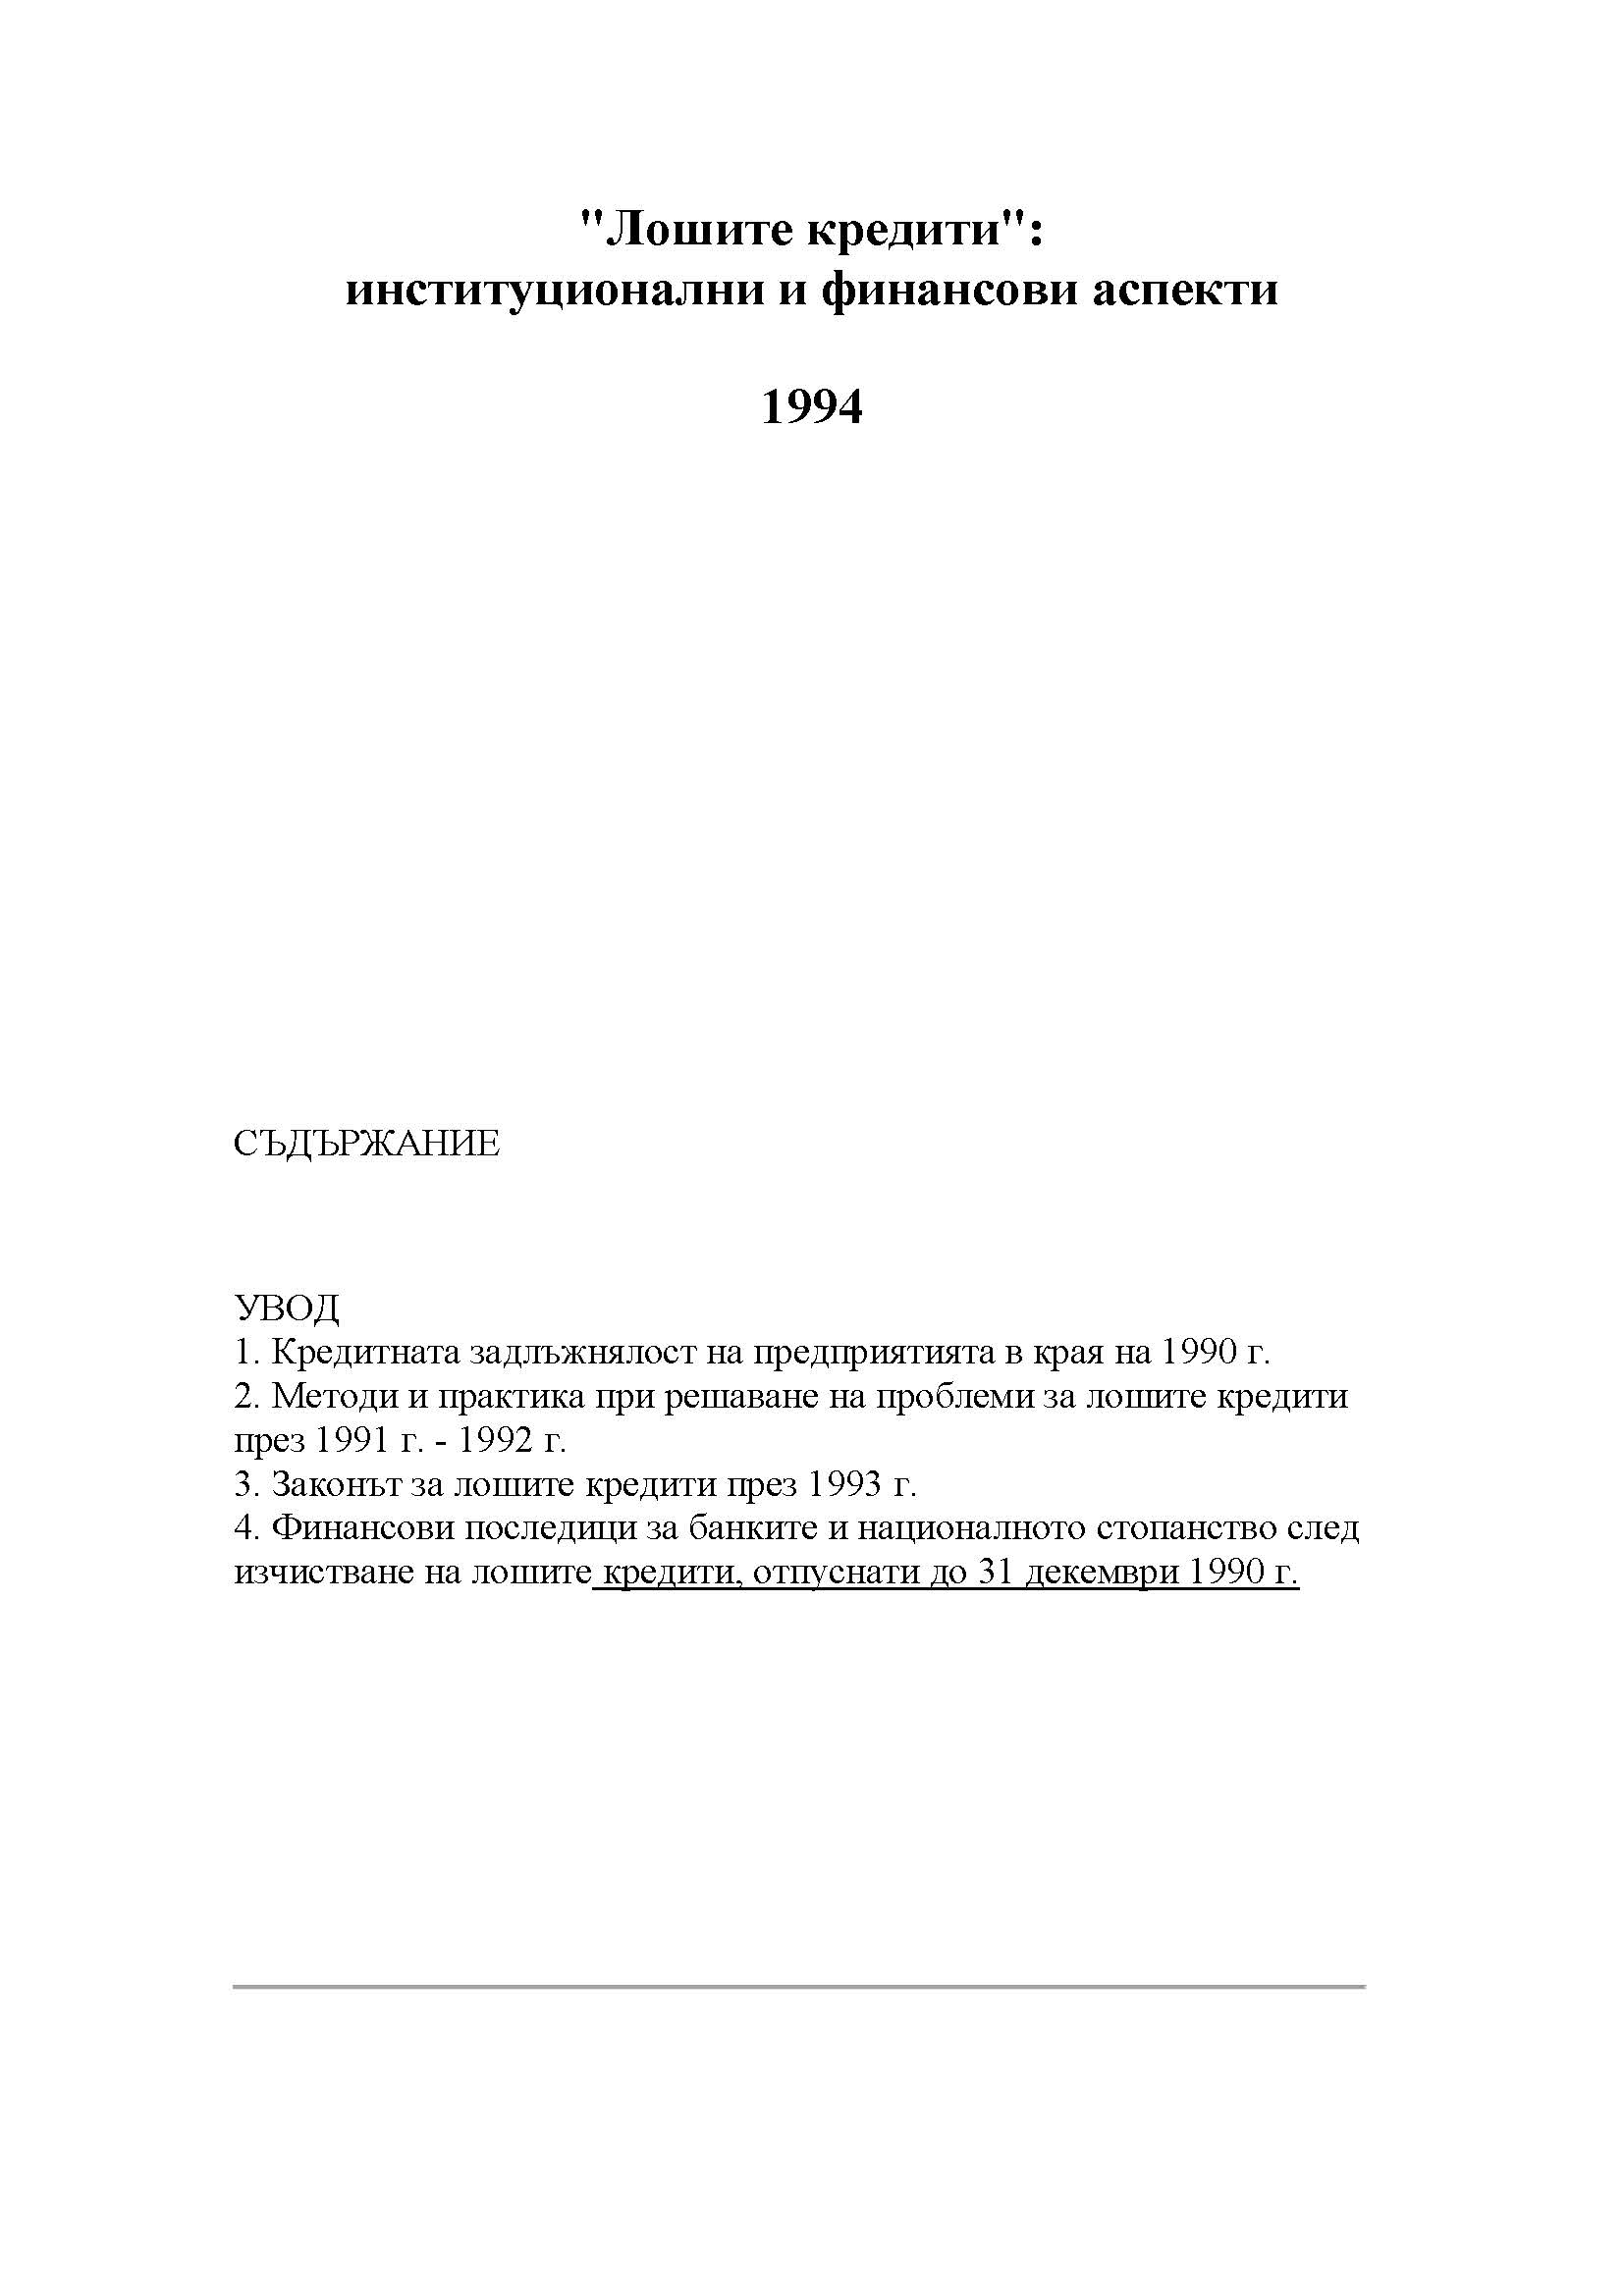 "Лошите кредити": институционални и финансови аспекти, 1994